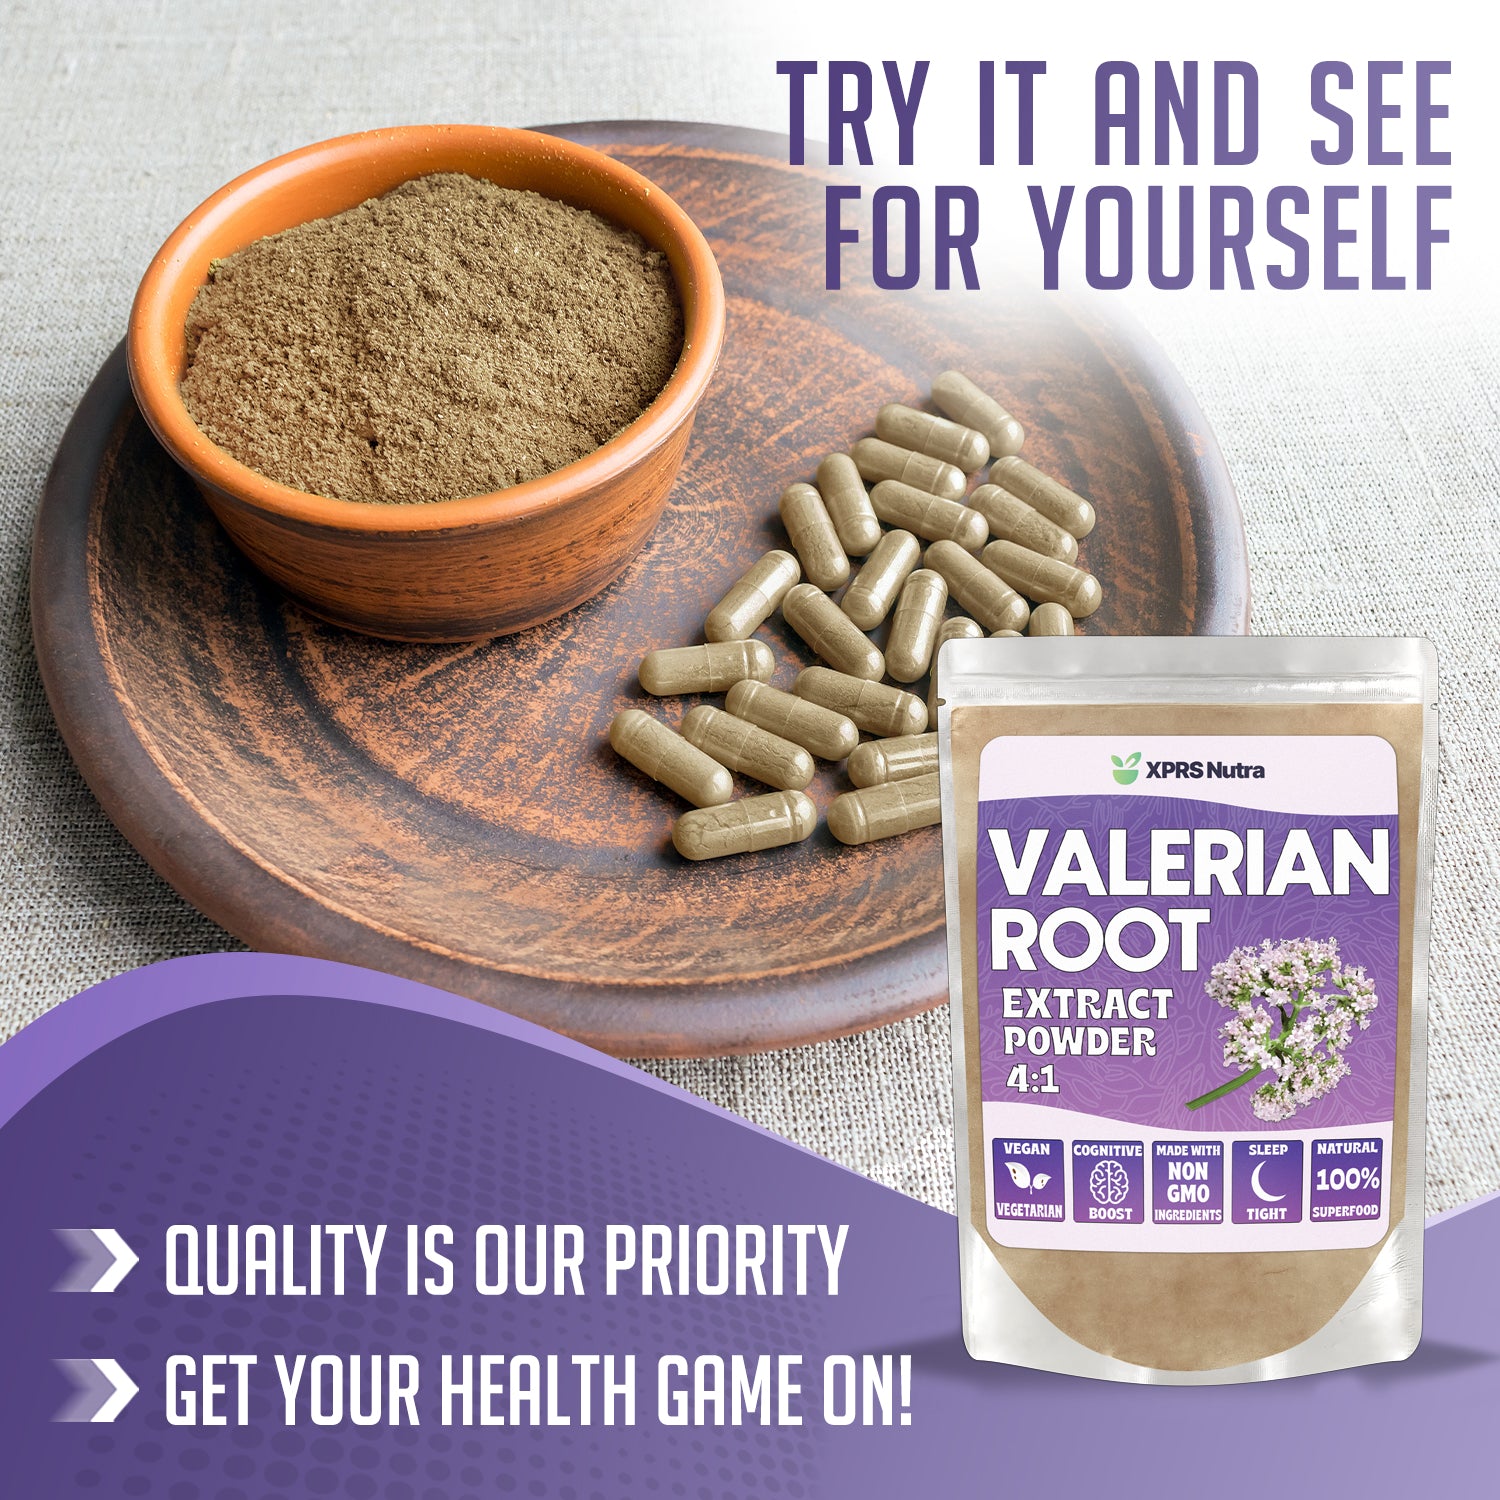 Valerian Root Extract Powder 4:1